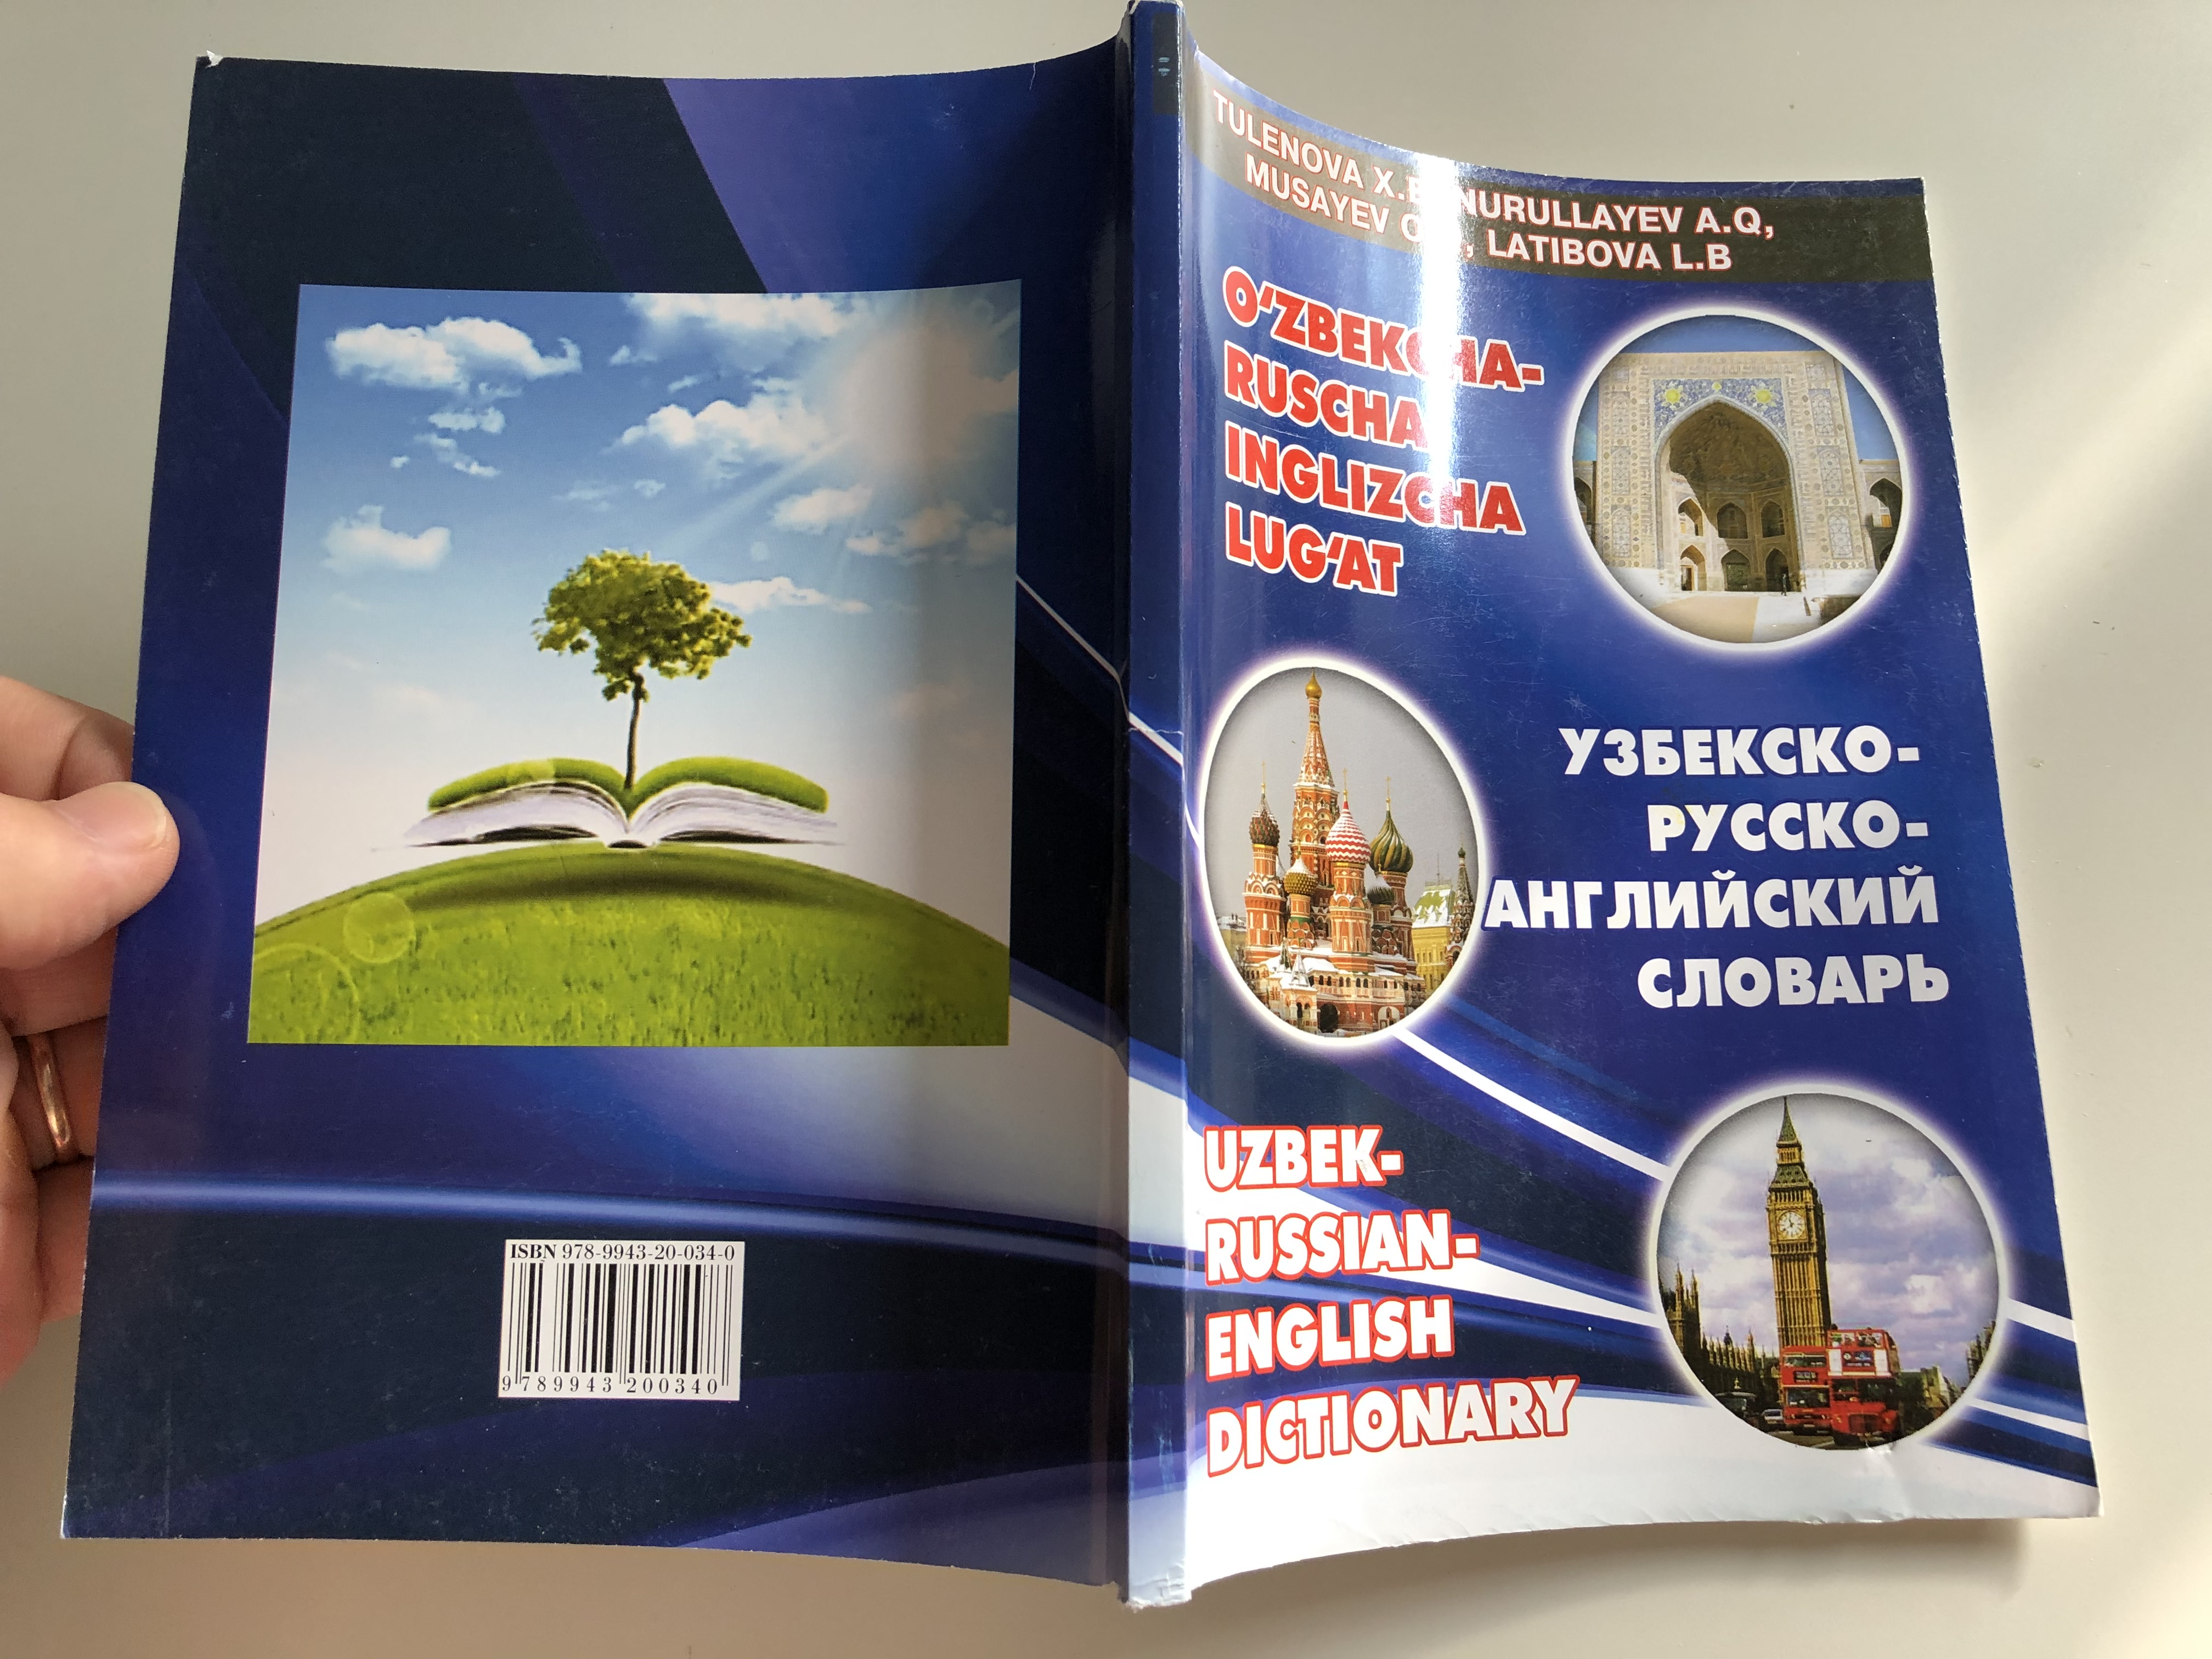 uzbek-russian-english-dictionary-by-tulenova-x.b-nurullayev-a.q-musayev-o.q-latibova-l.b-o-zbekcha-ruscha-inglizcha-lug-at-dizayn-press-2011-10-.jpg